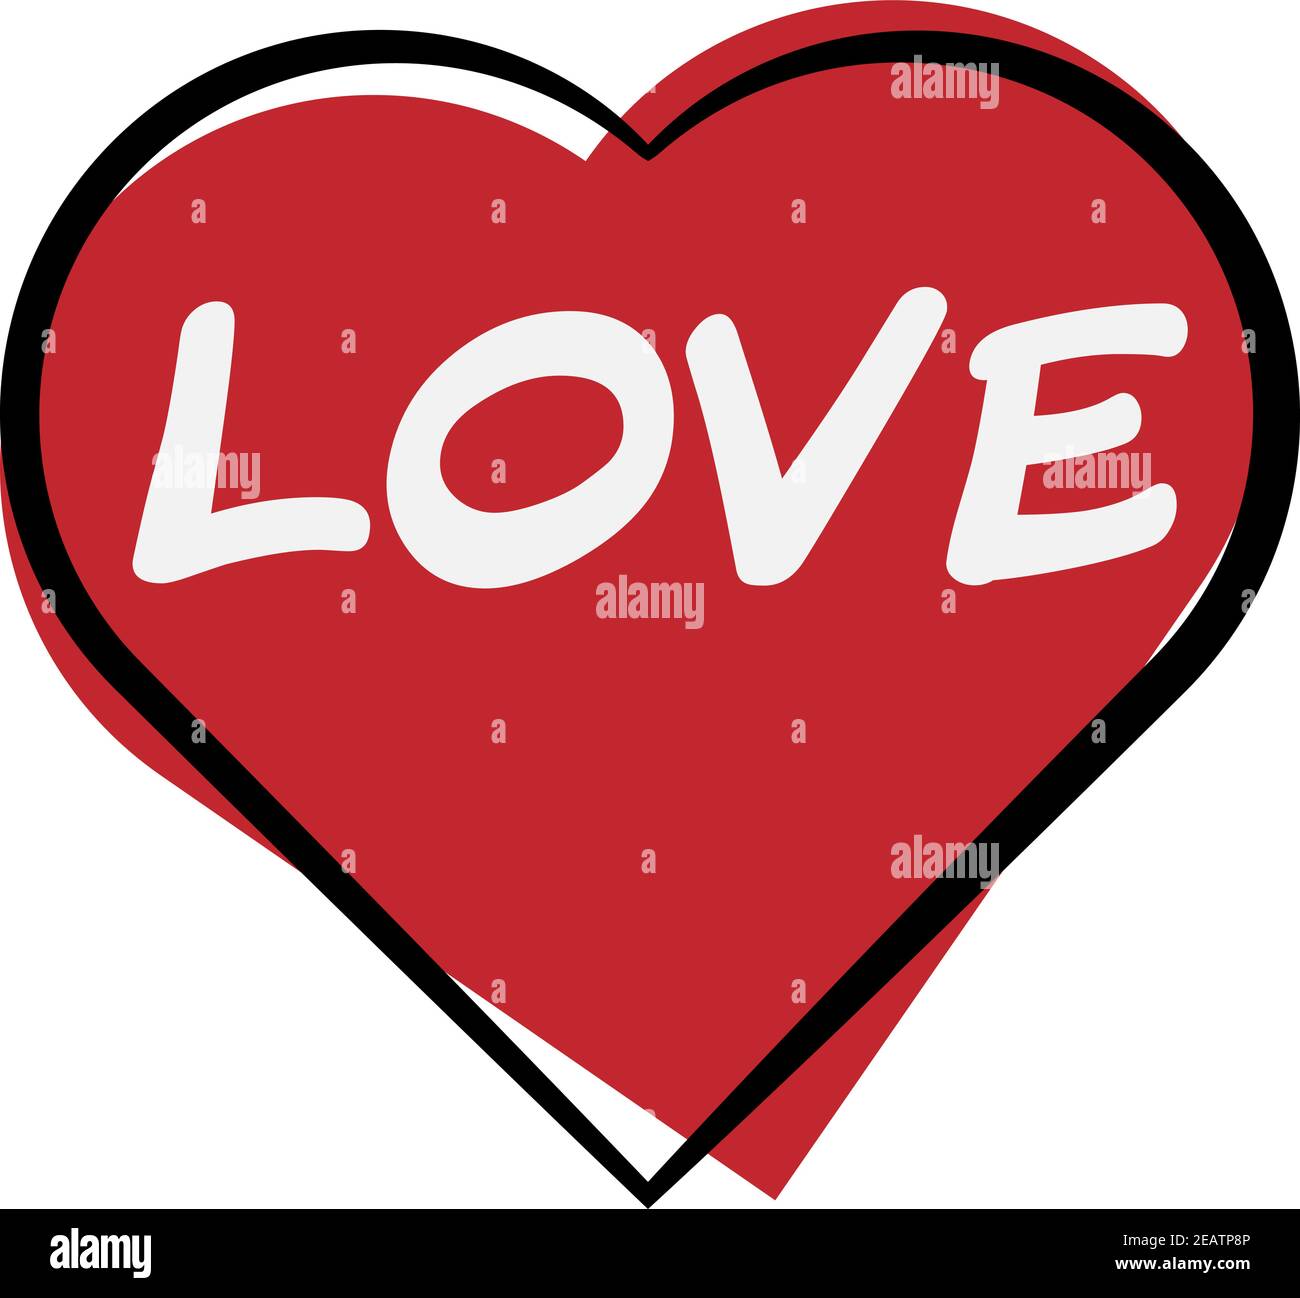 heart shape icon with wort LOVE written inside vector illustration Stock Vector